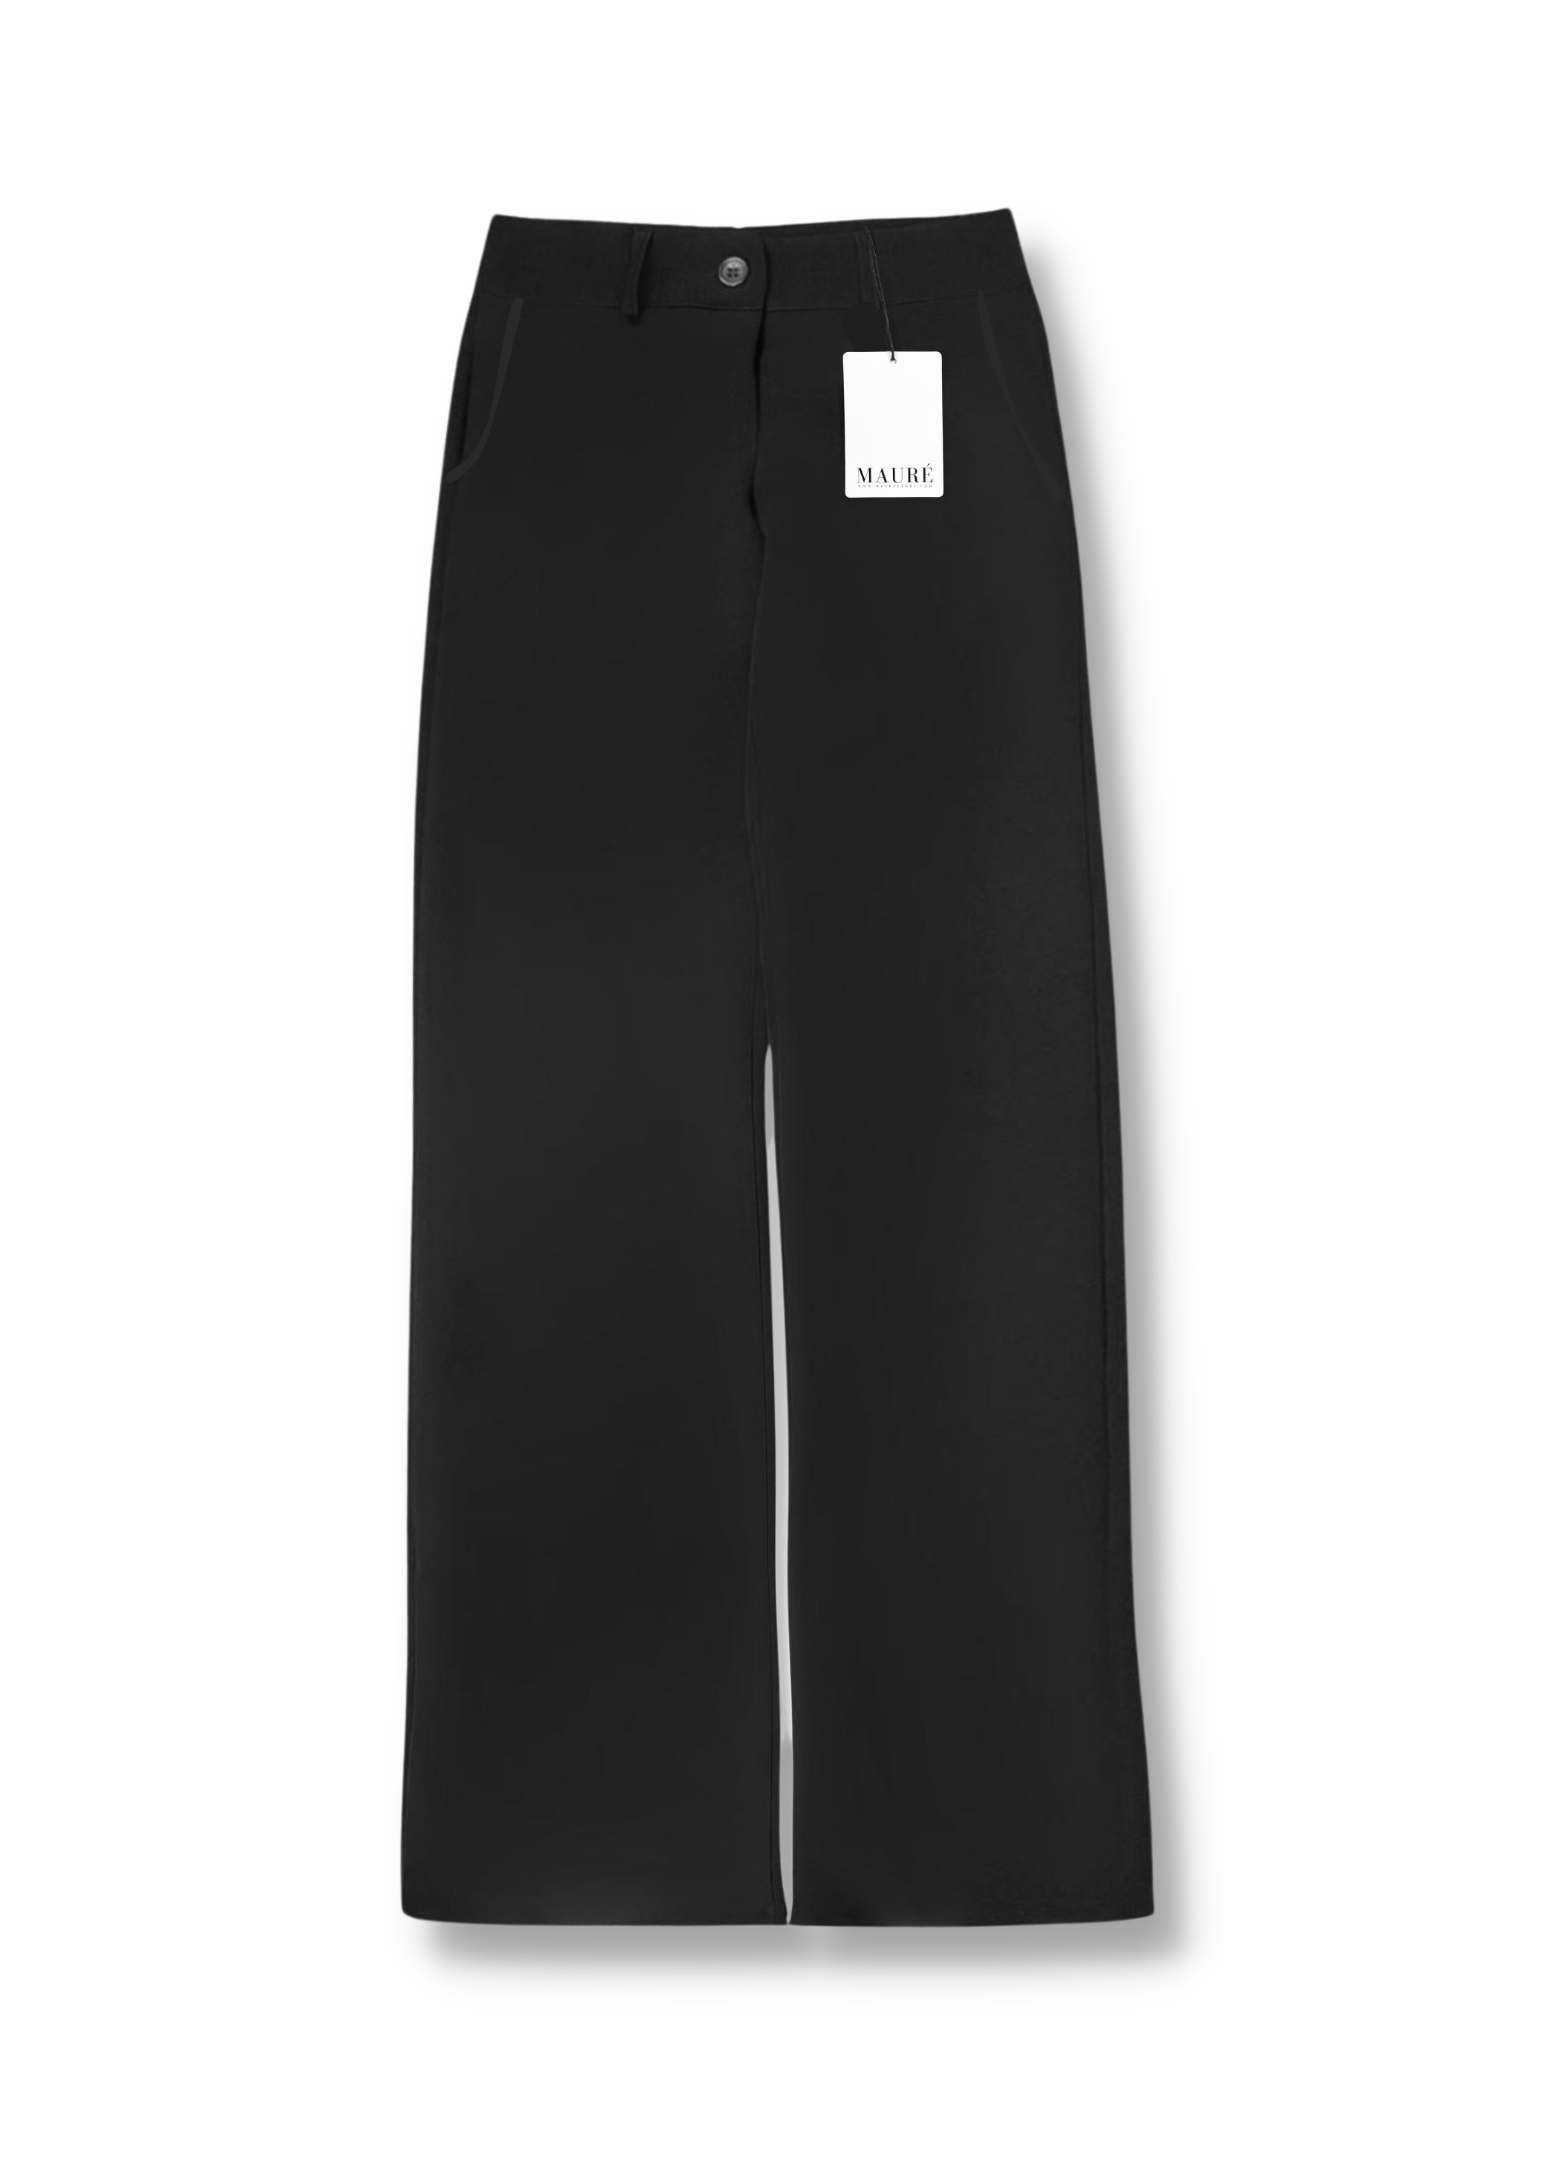 Low/mid waist straight leg pants casual black (TALL)